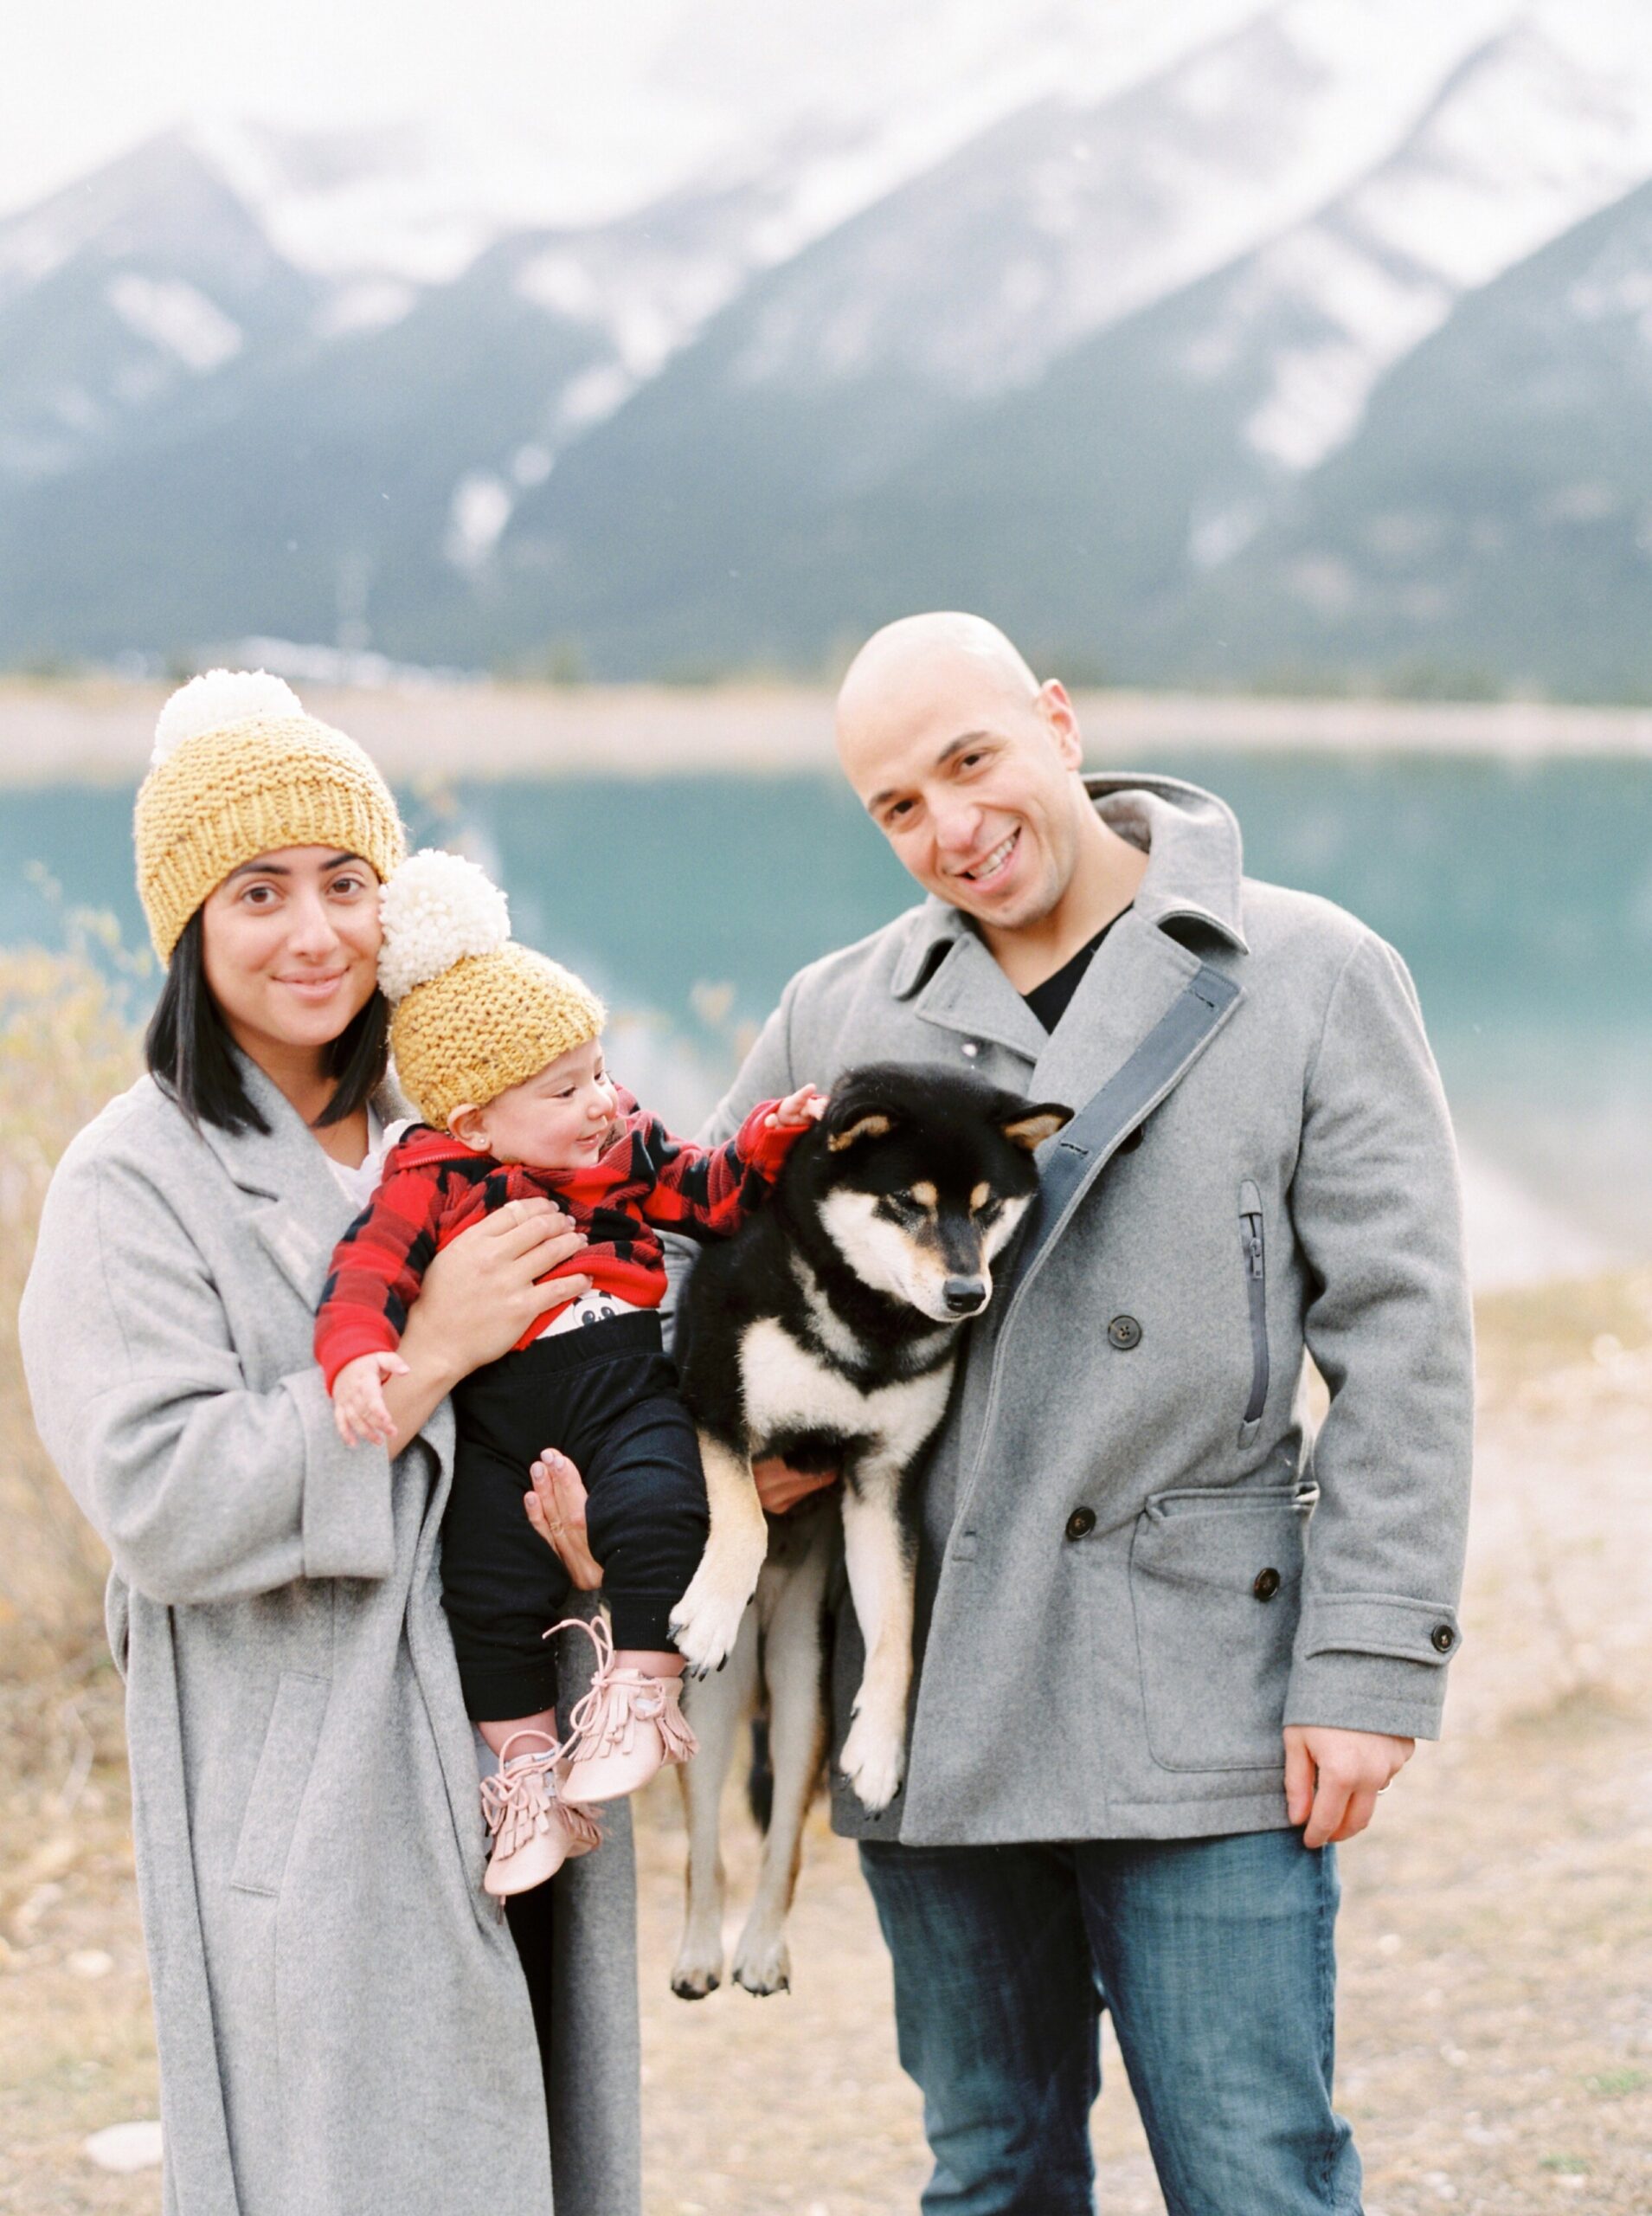  Banff family photographer | film family photographers | Justine milton photography 